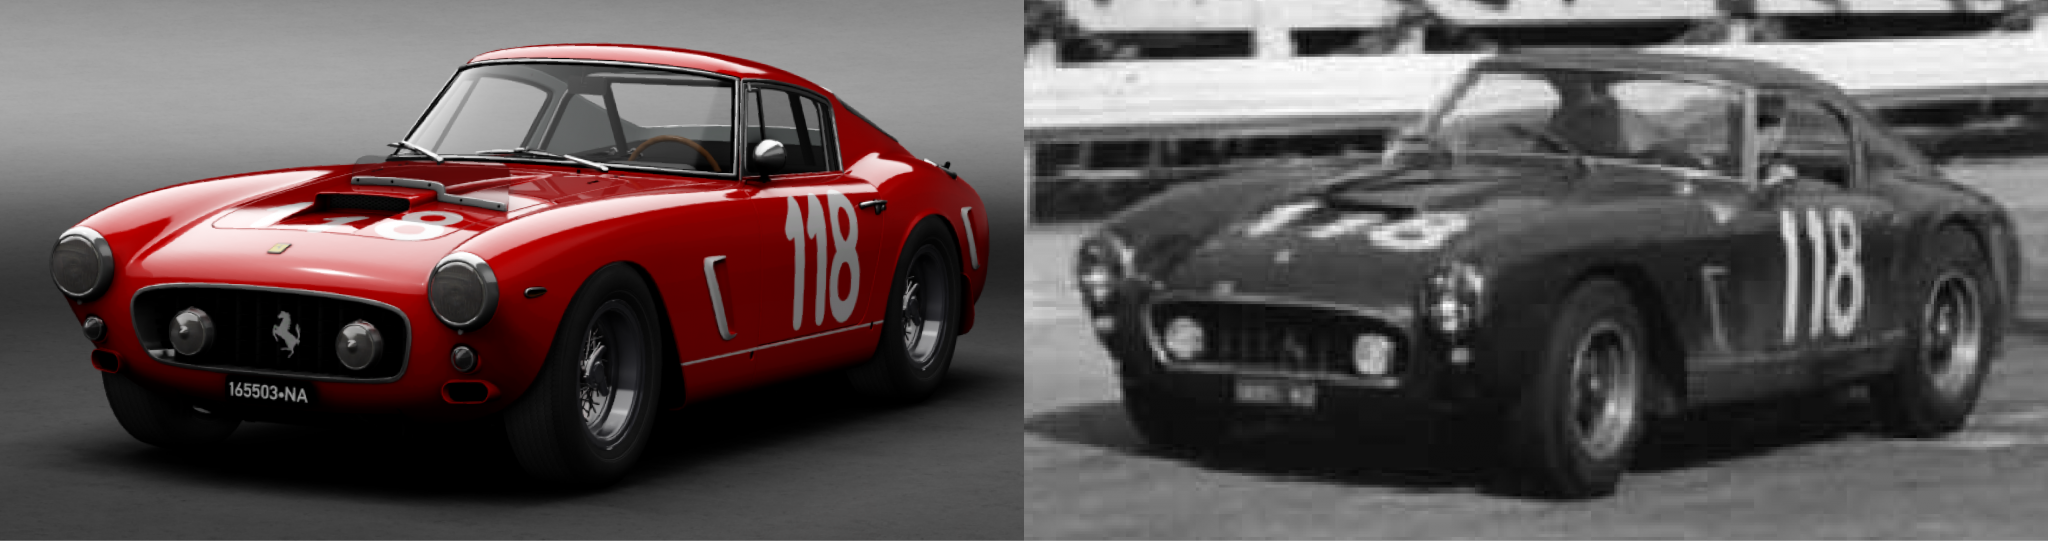 Ferrari 250 GT SWB Targa Florio Side by Side_1963.png